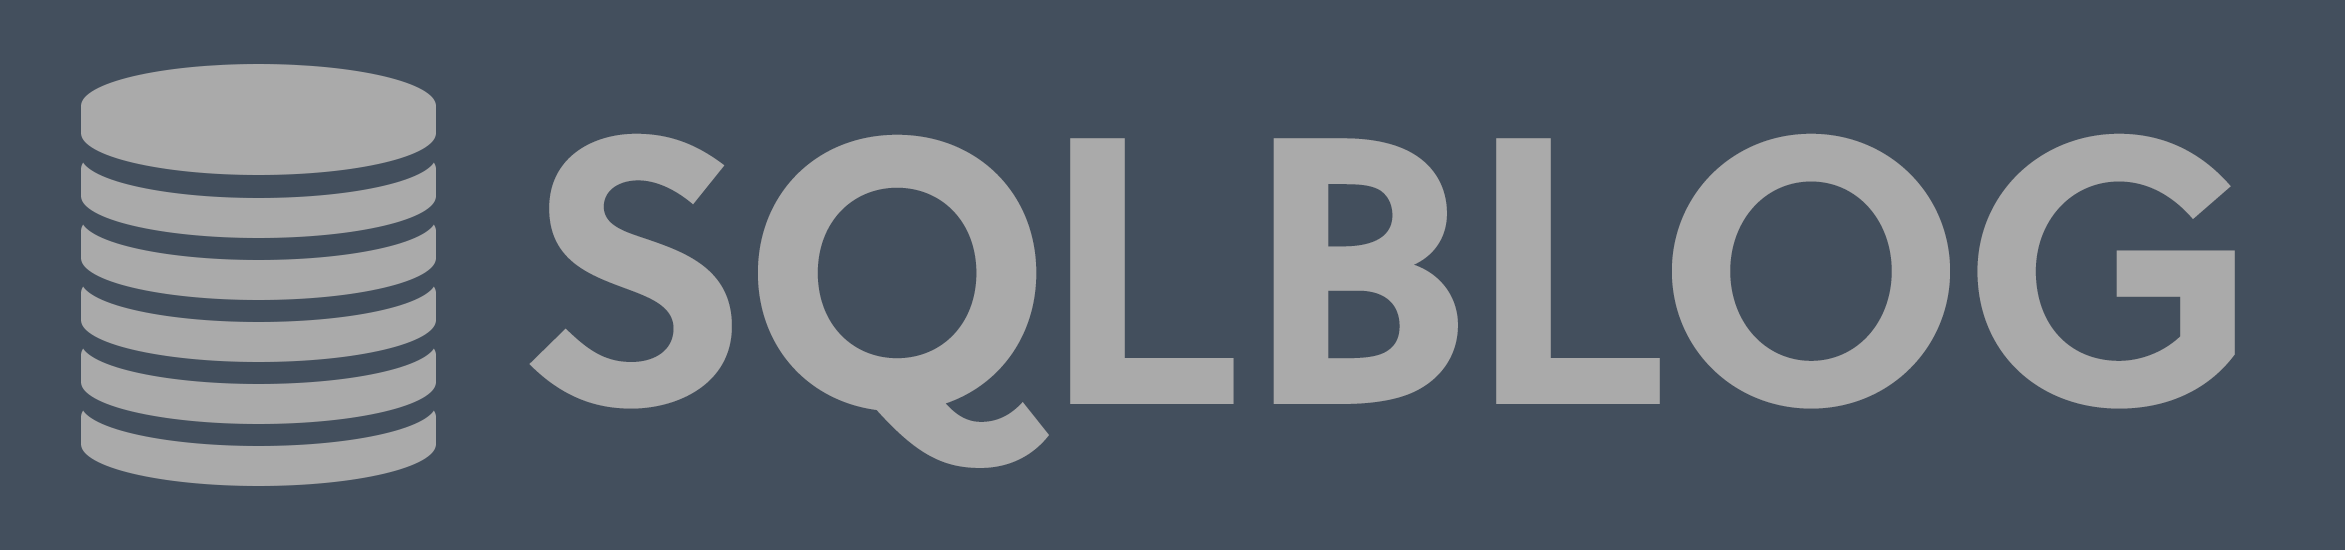 SQLBlog.org